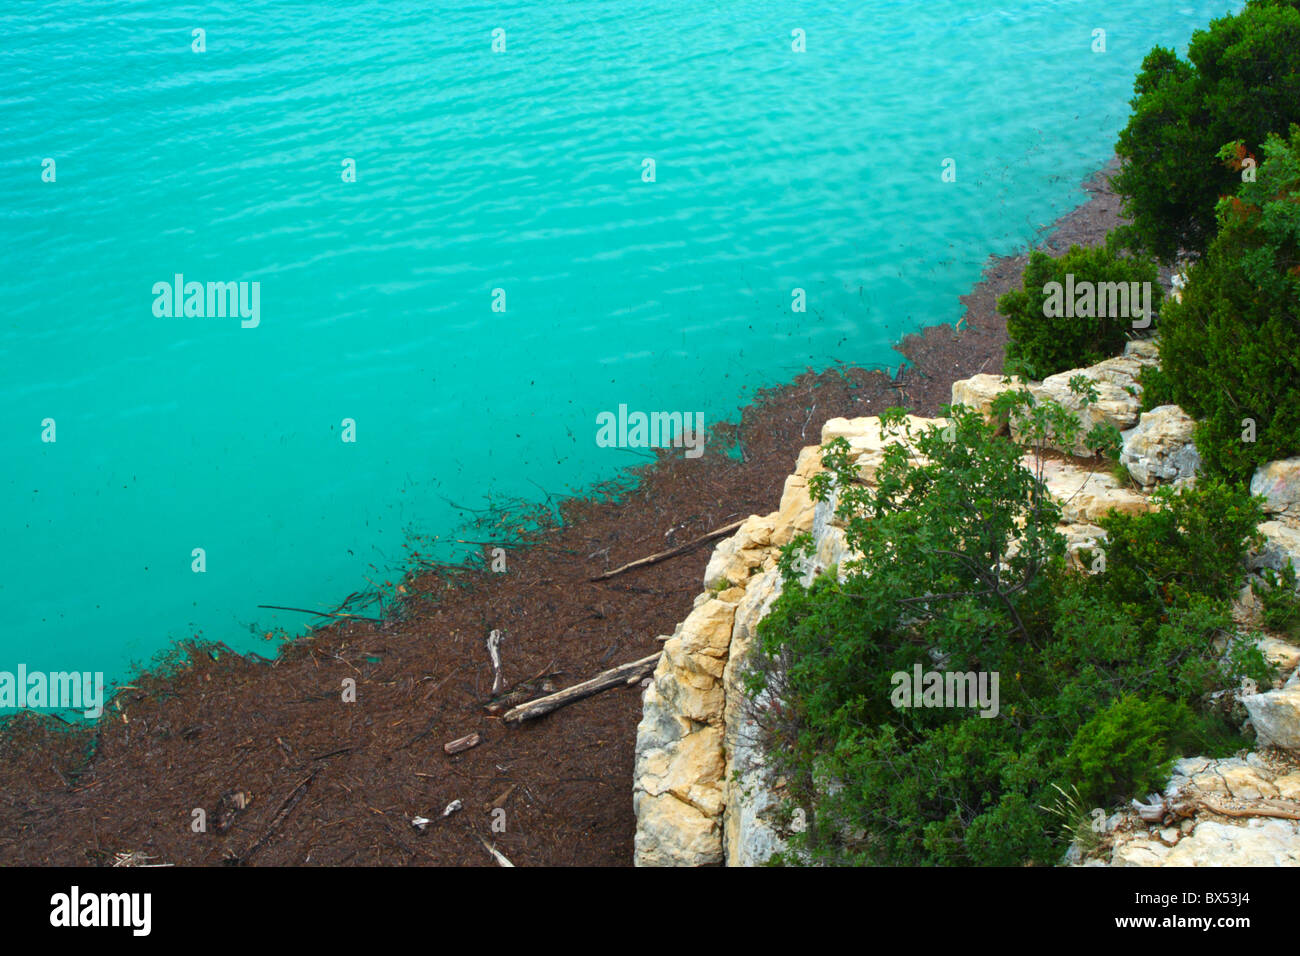 Debris washed up on the shore of Lake Sainte-Croix (Lac de Sainte-Croix) in the Verdon basin of Provence, France, Europe. Stock Photo